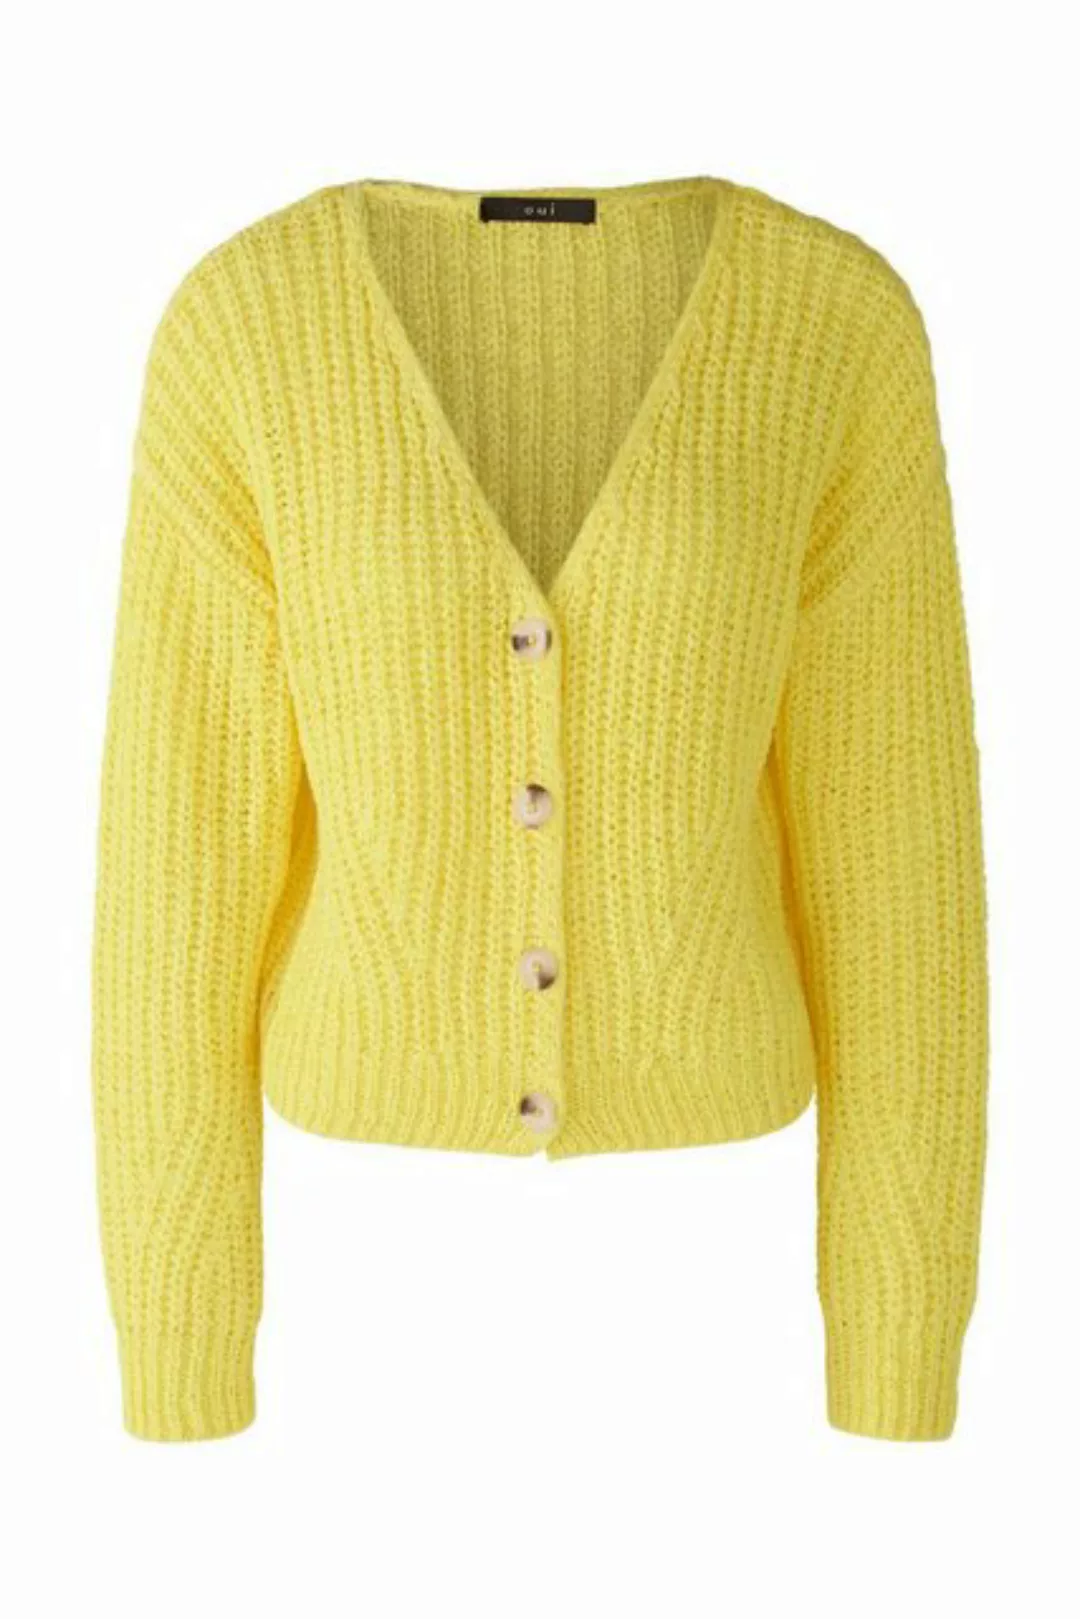 Oui Strickjacke Jacke/Jacket, yellow günstig online kaufen